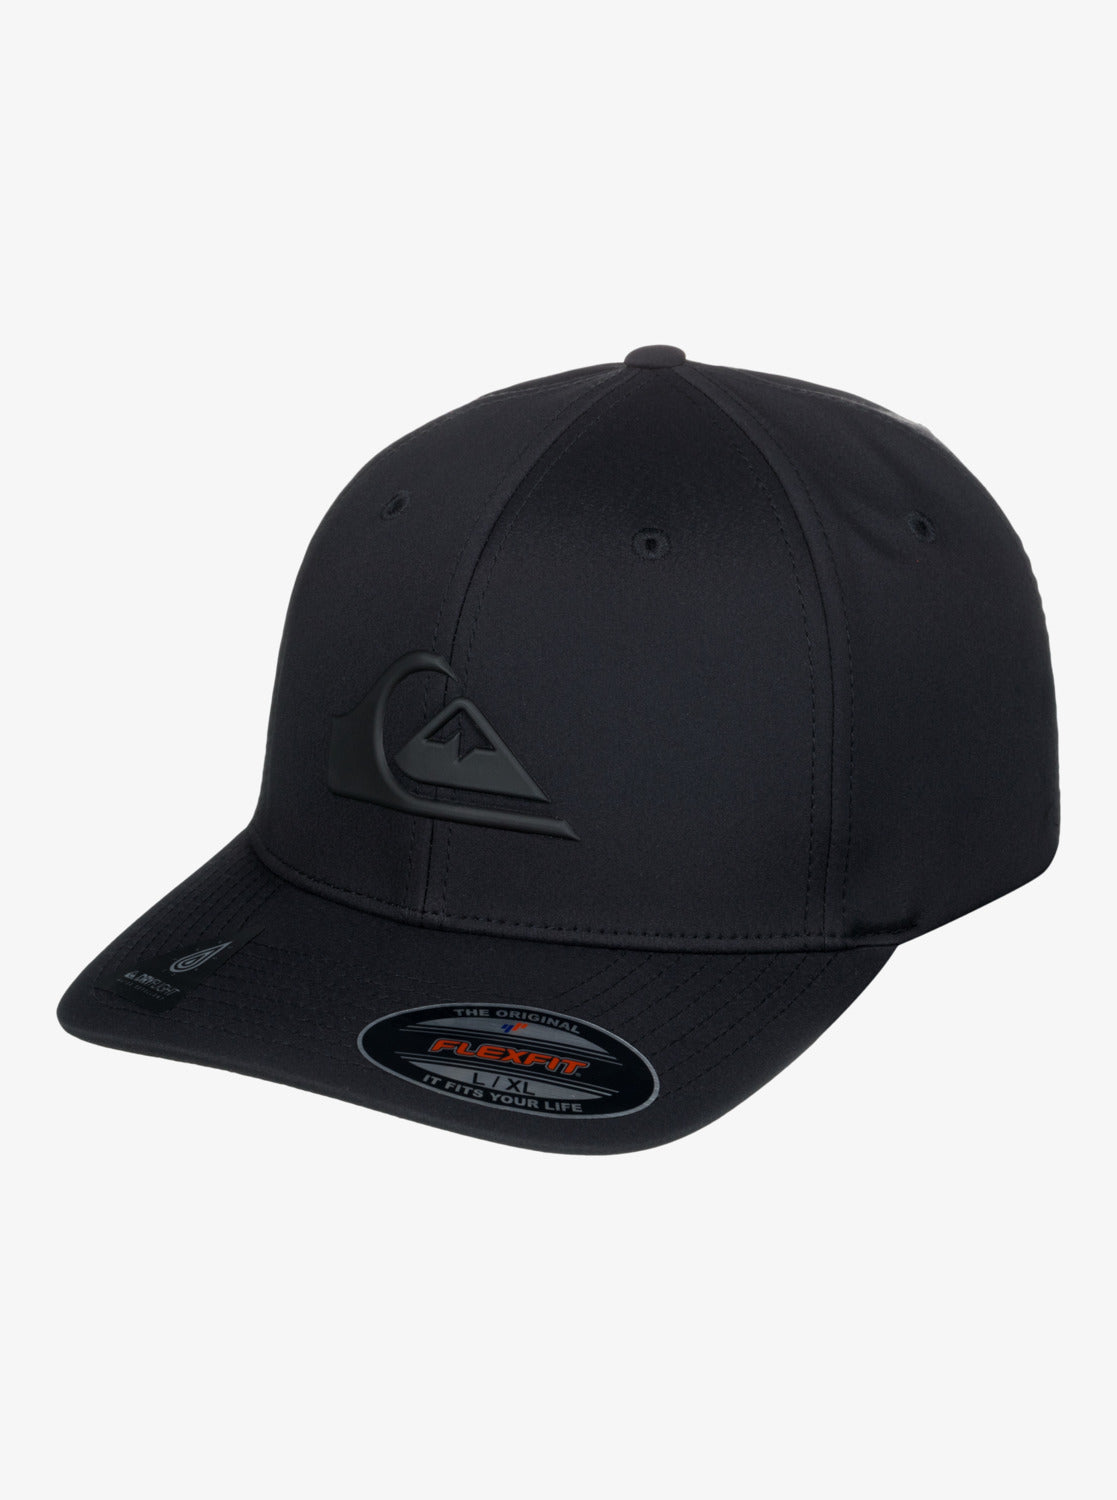 Amped Up Flexifit Hat - True Black